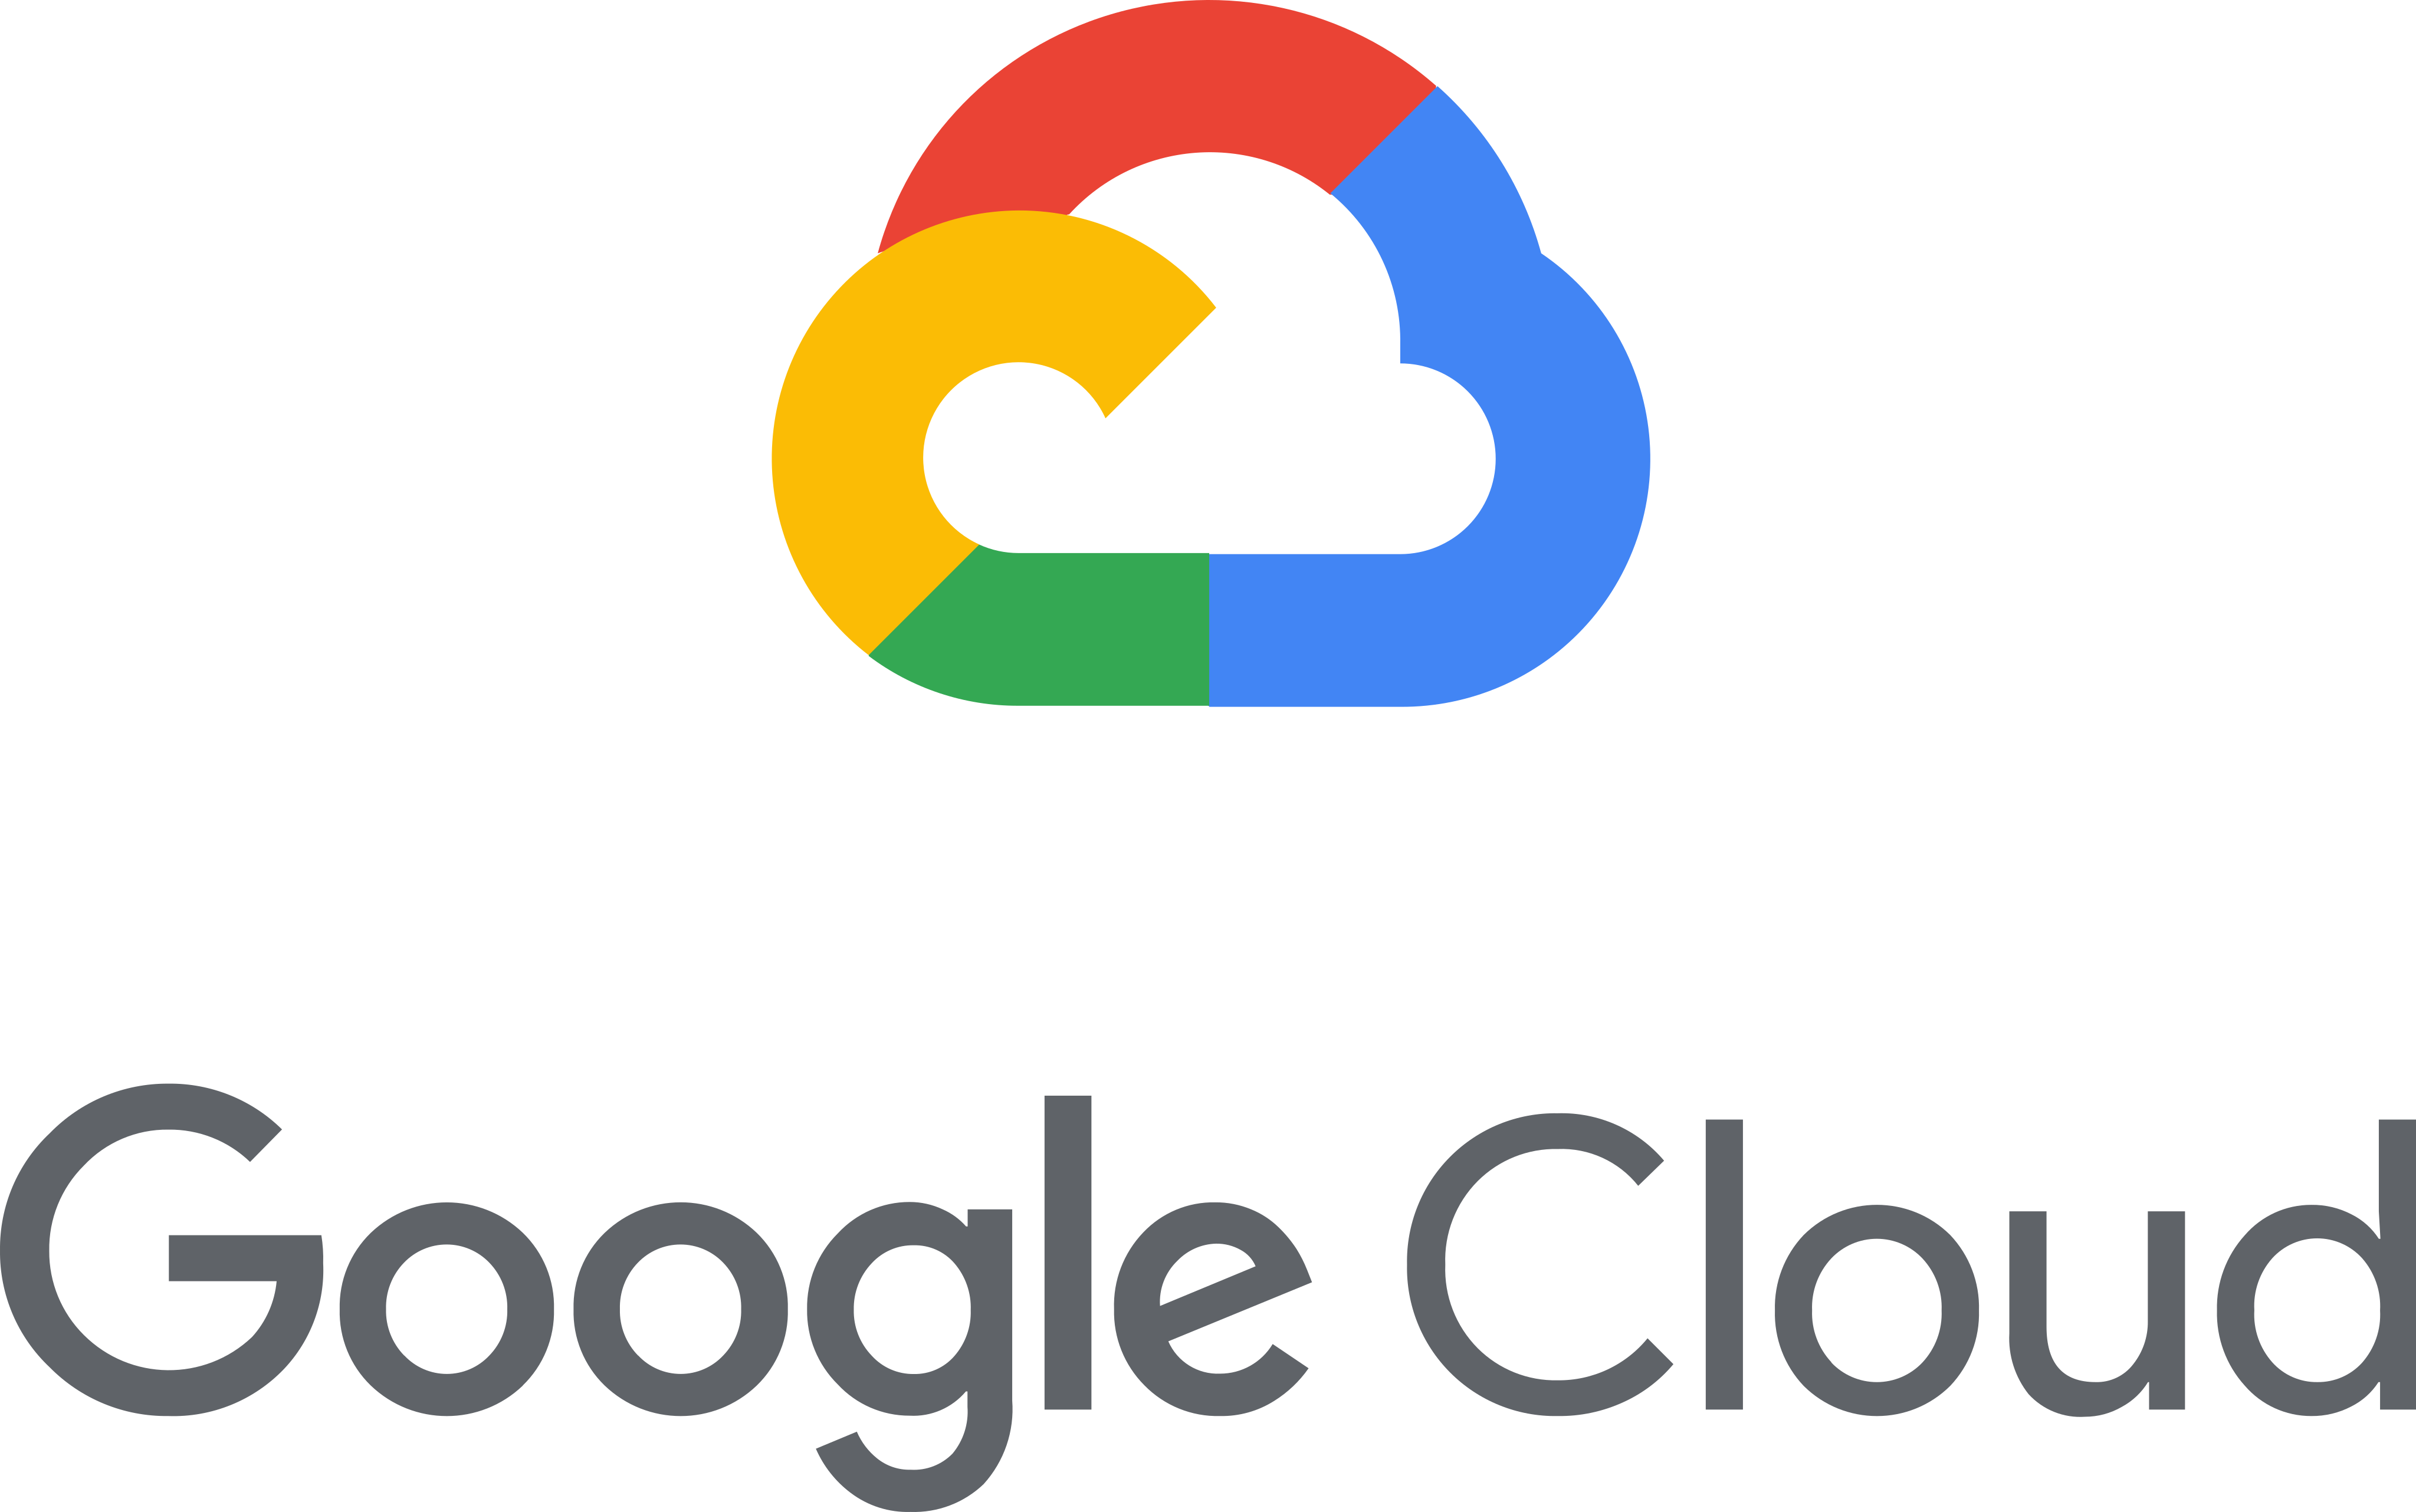 Google Cloud Logo PNG Pic